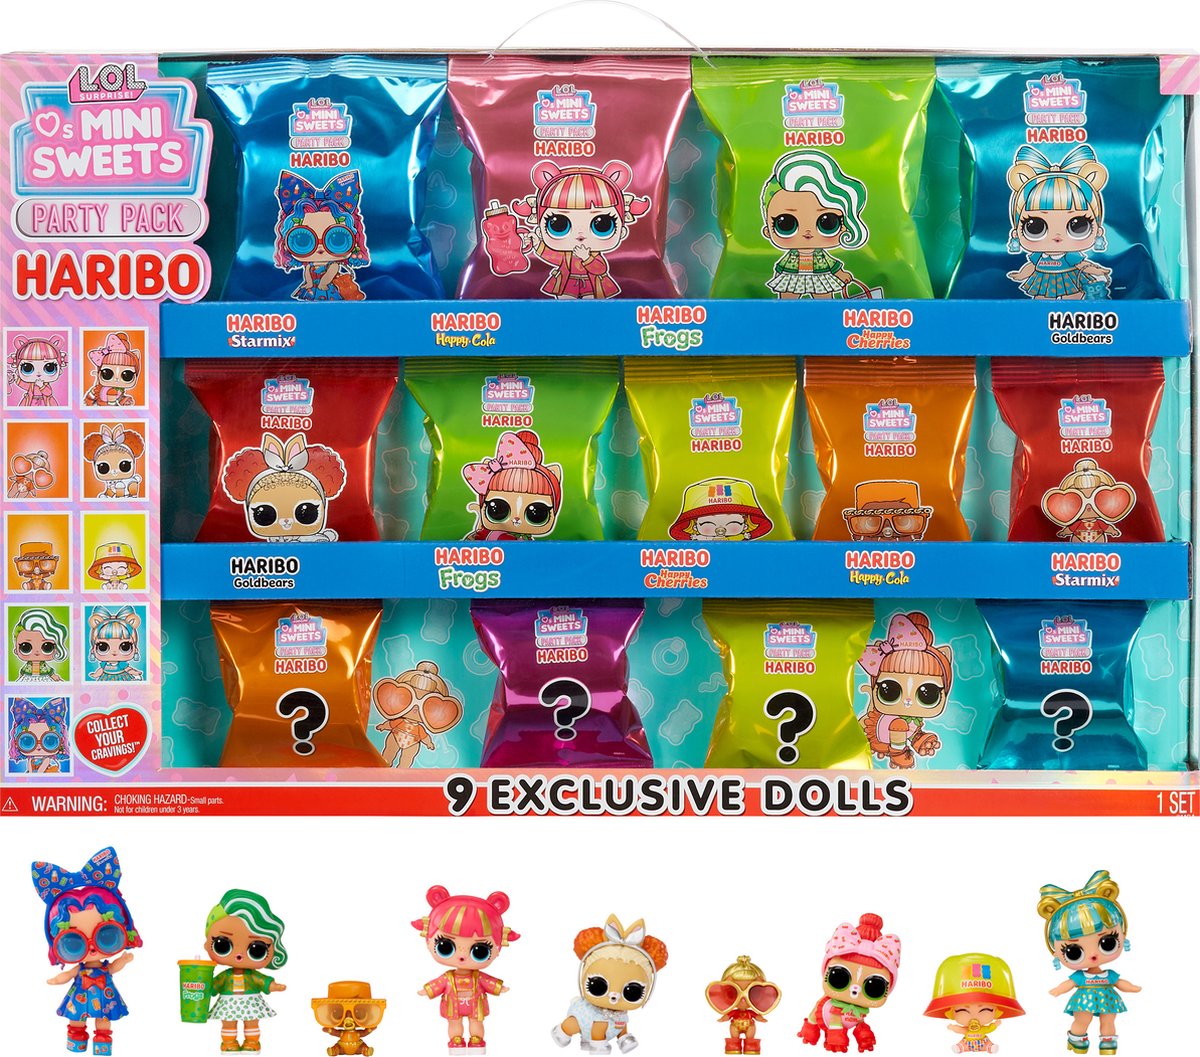 L.O.L. Surprise! Loves Mini Sweets X Haribo Party Pack - Minipop - L.O.L. Surprise!